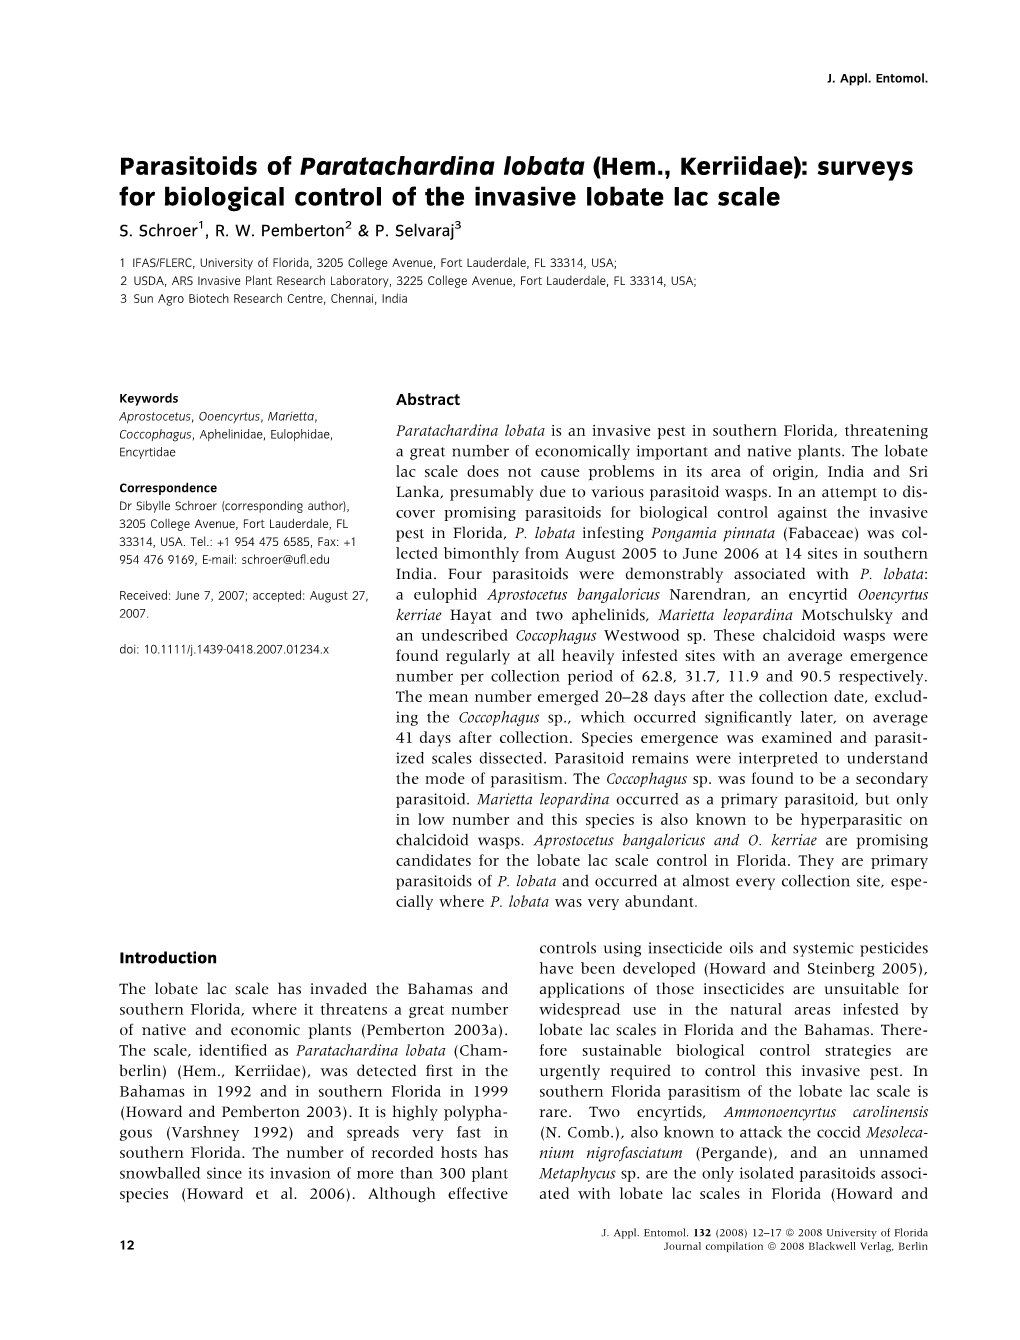 Parasitoids of Paratachardina Lobata (Hem., Kerriidae): Surveys for Biological Control of the Invasive Lobate Lac Scale S